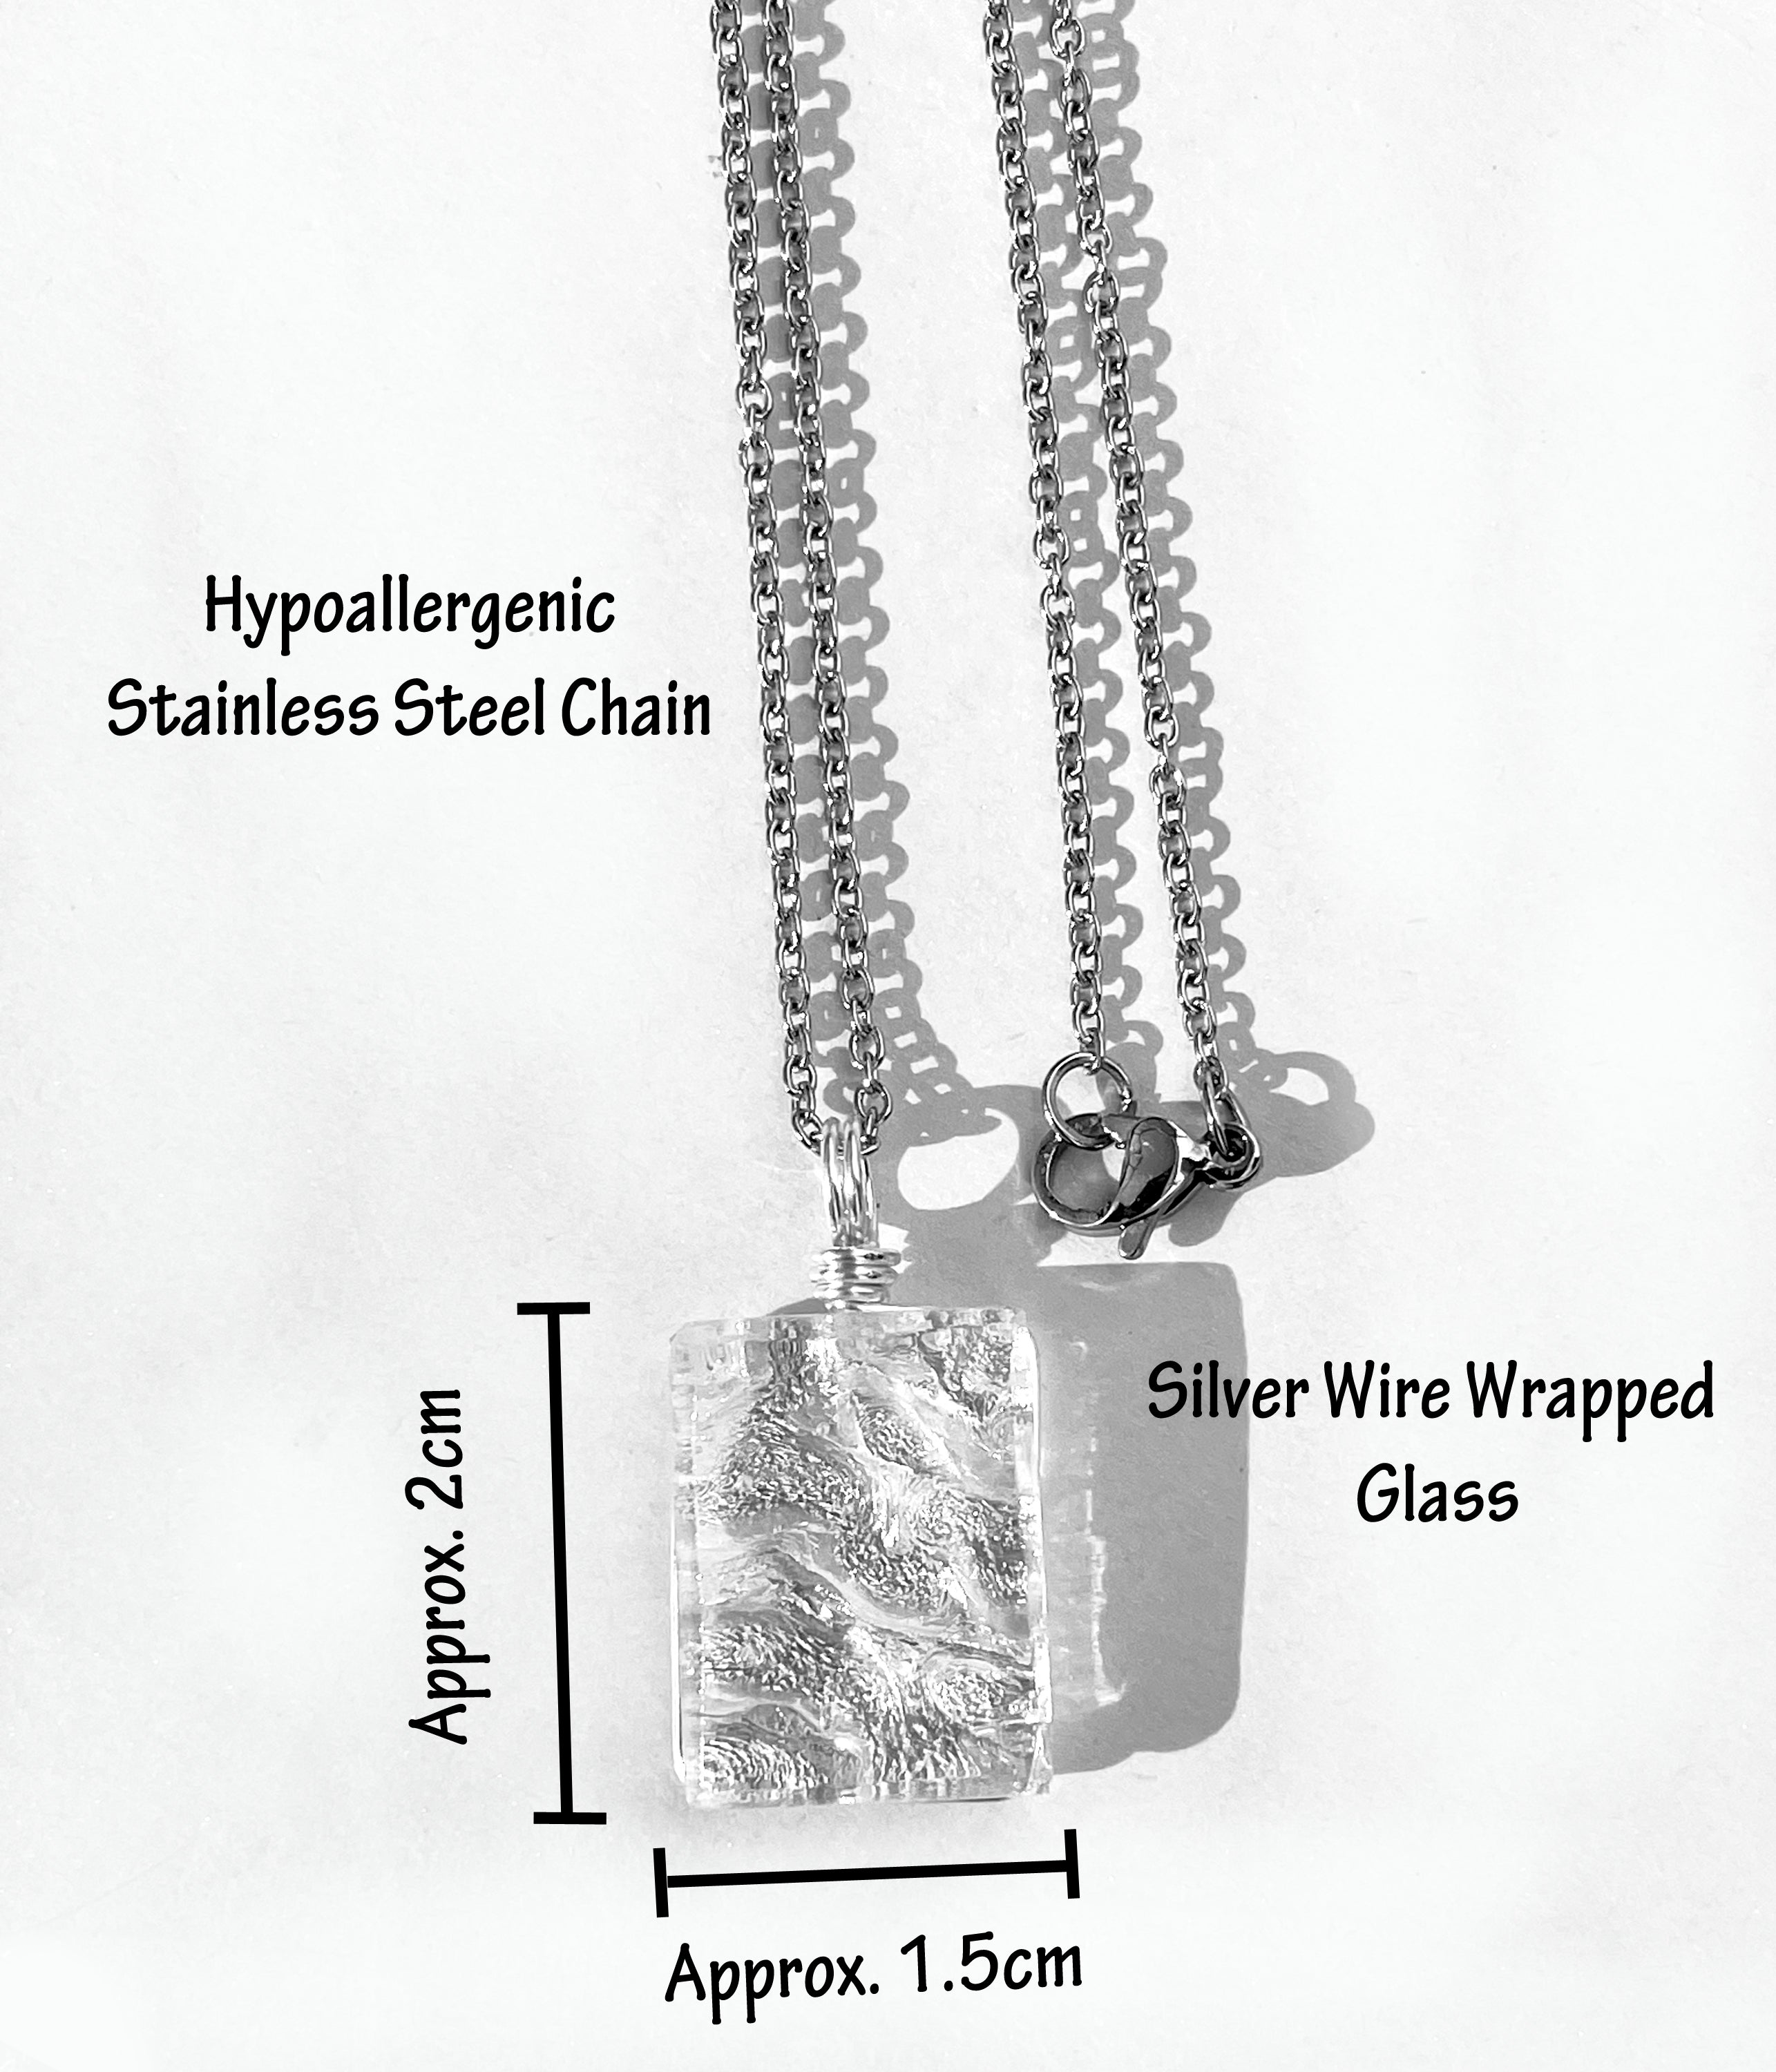 Dichroic Glass Pendant - Opal